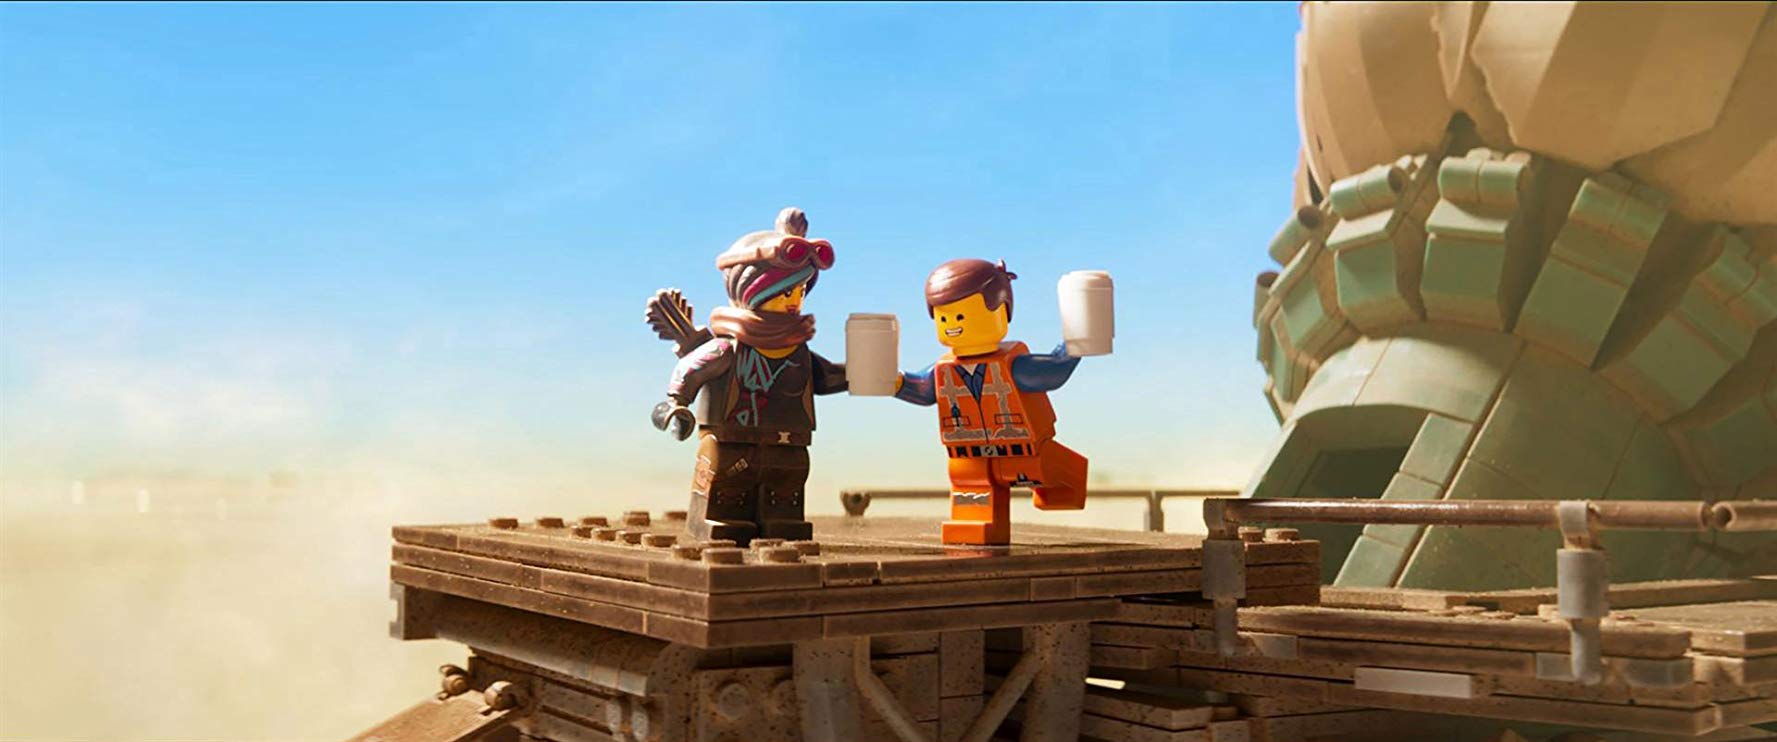 (Tráiler) «The Lego Movie 2: The Second Part» trae un nuevo personaje